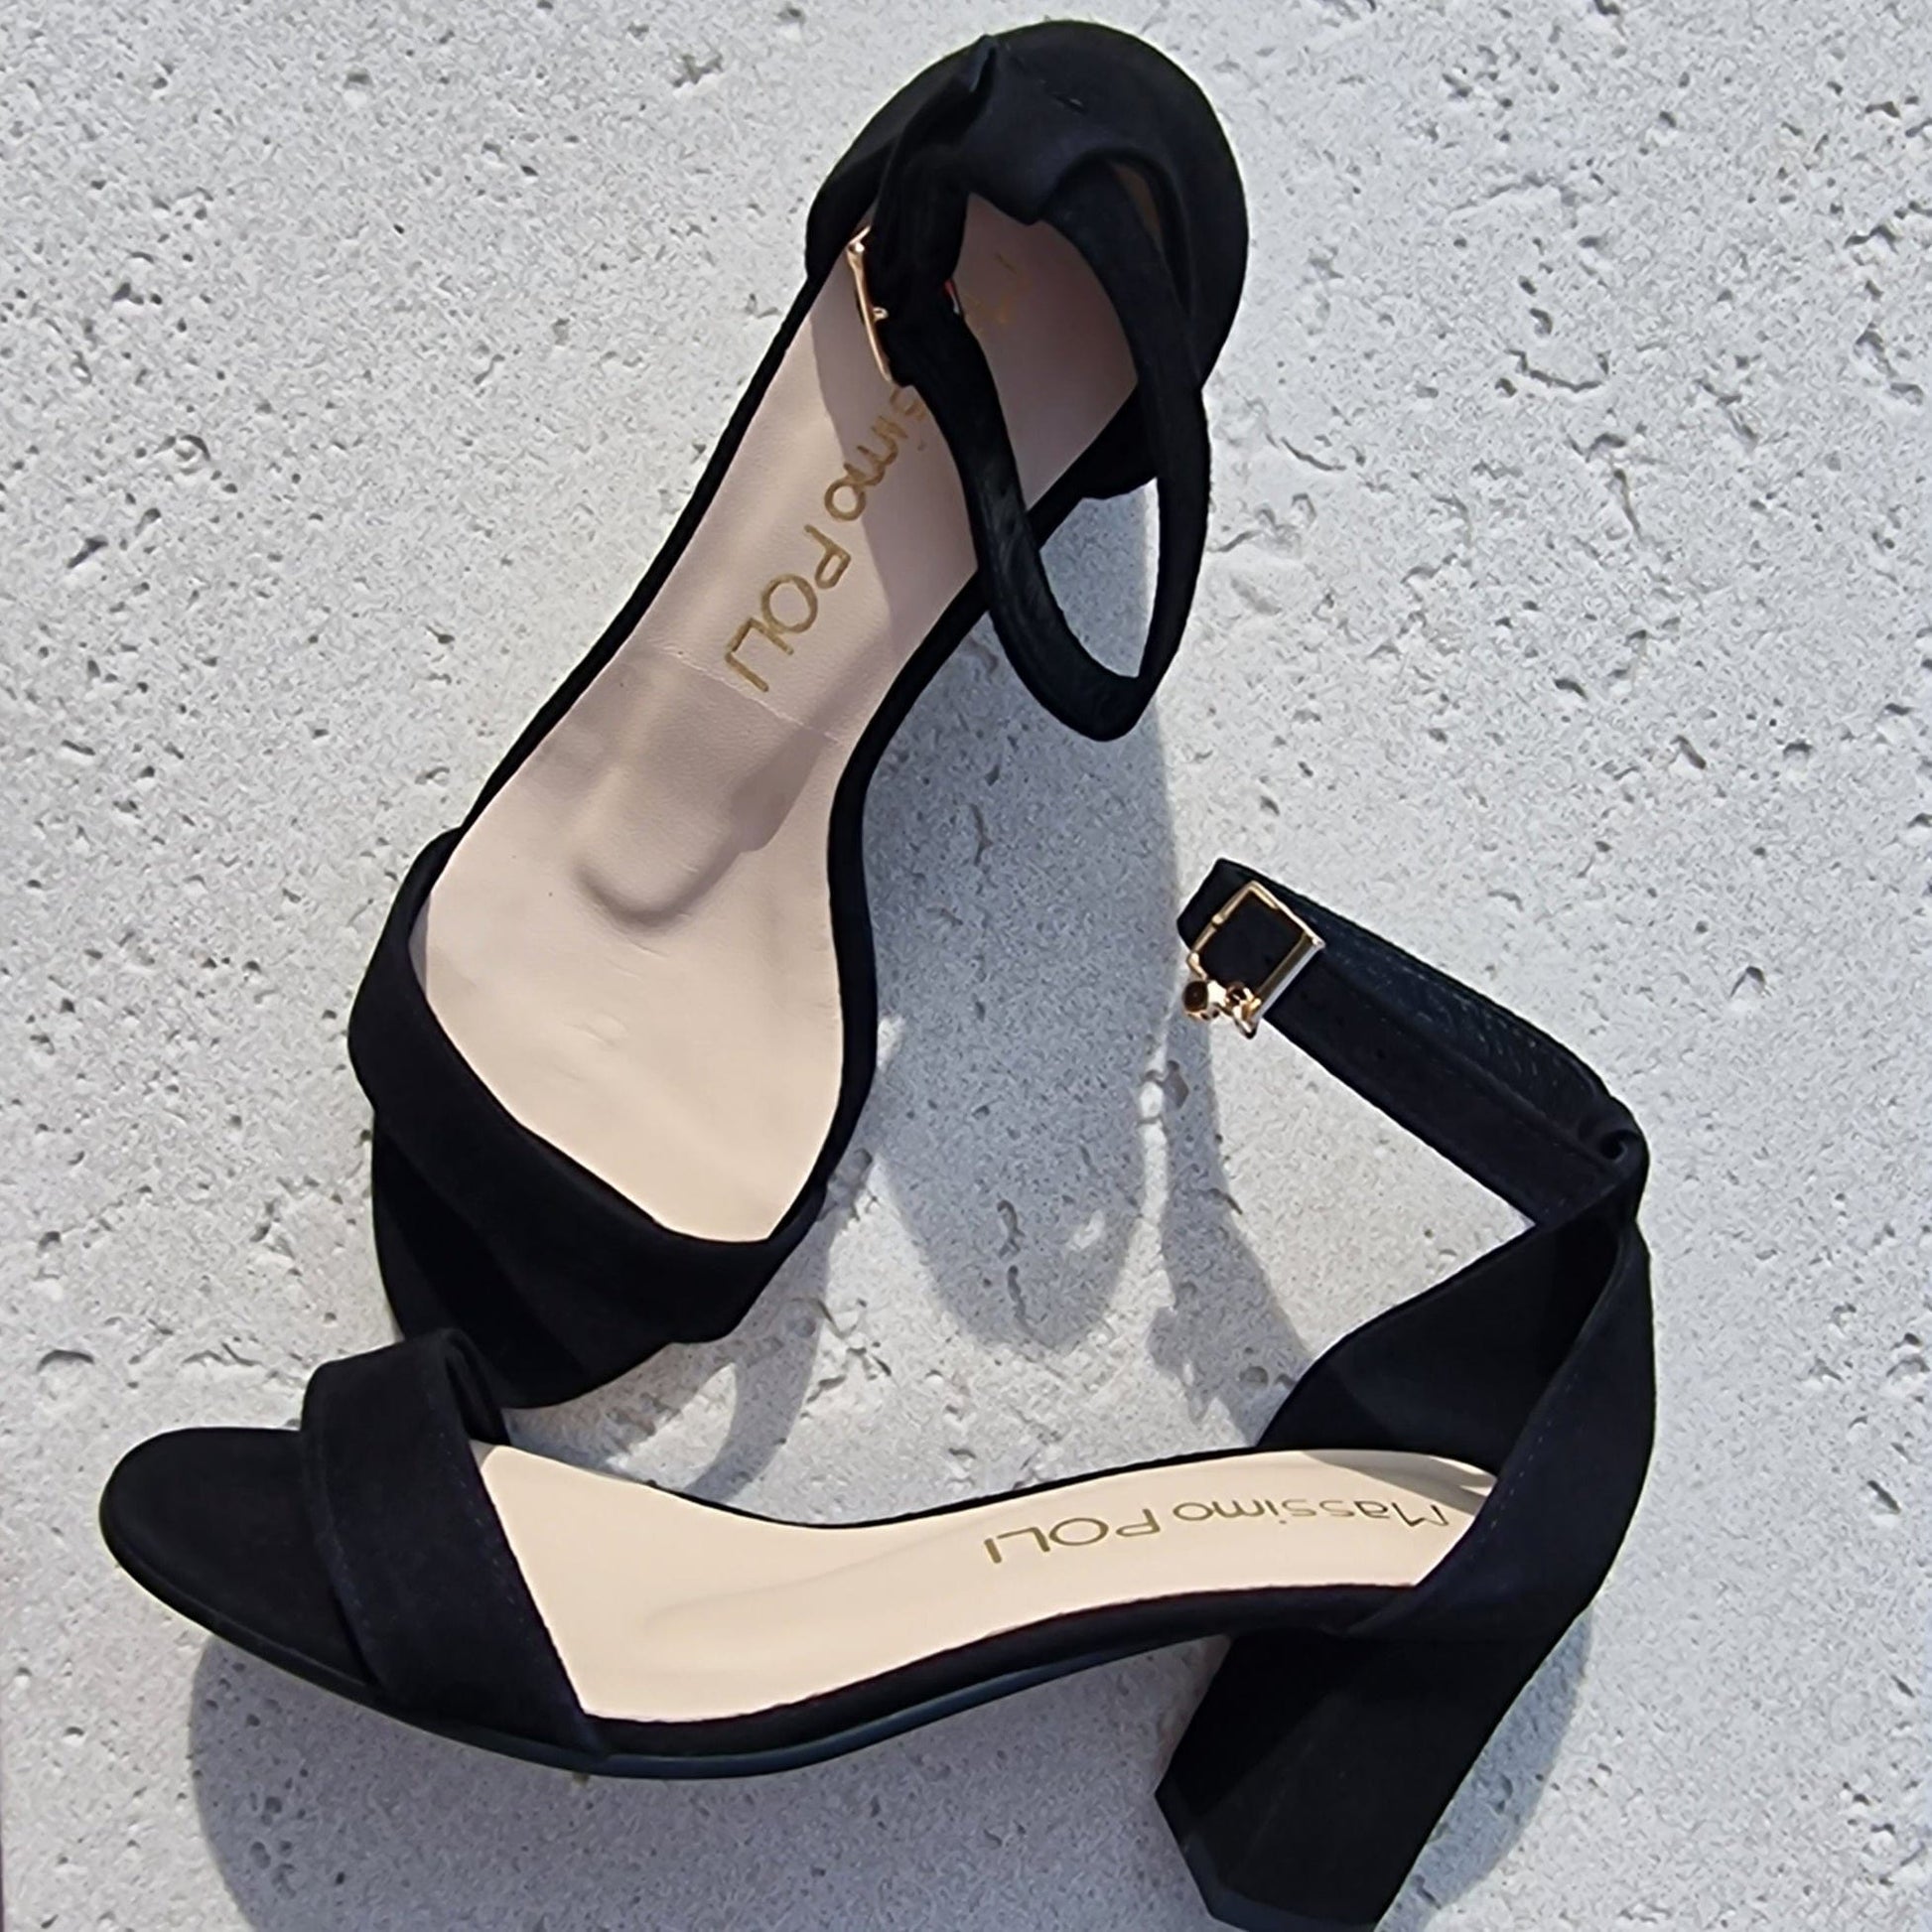 Petite size black strap heels